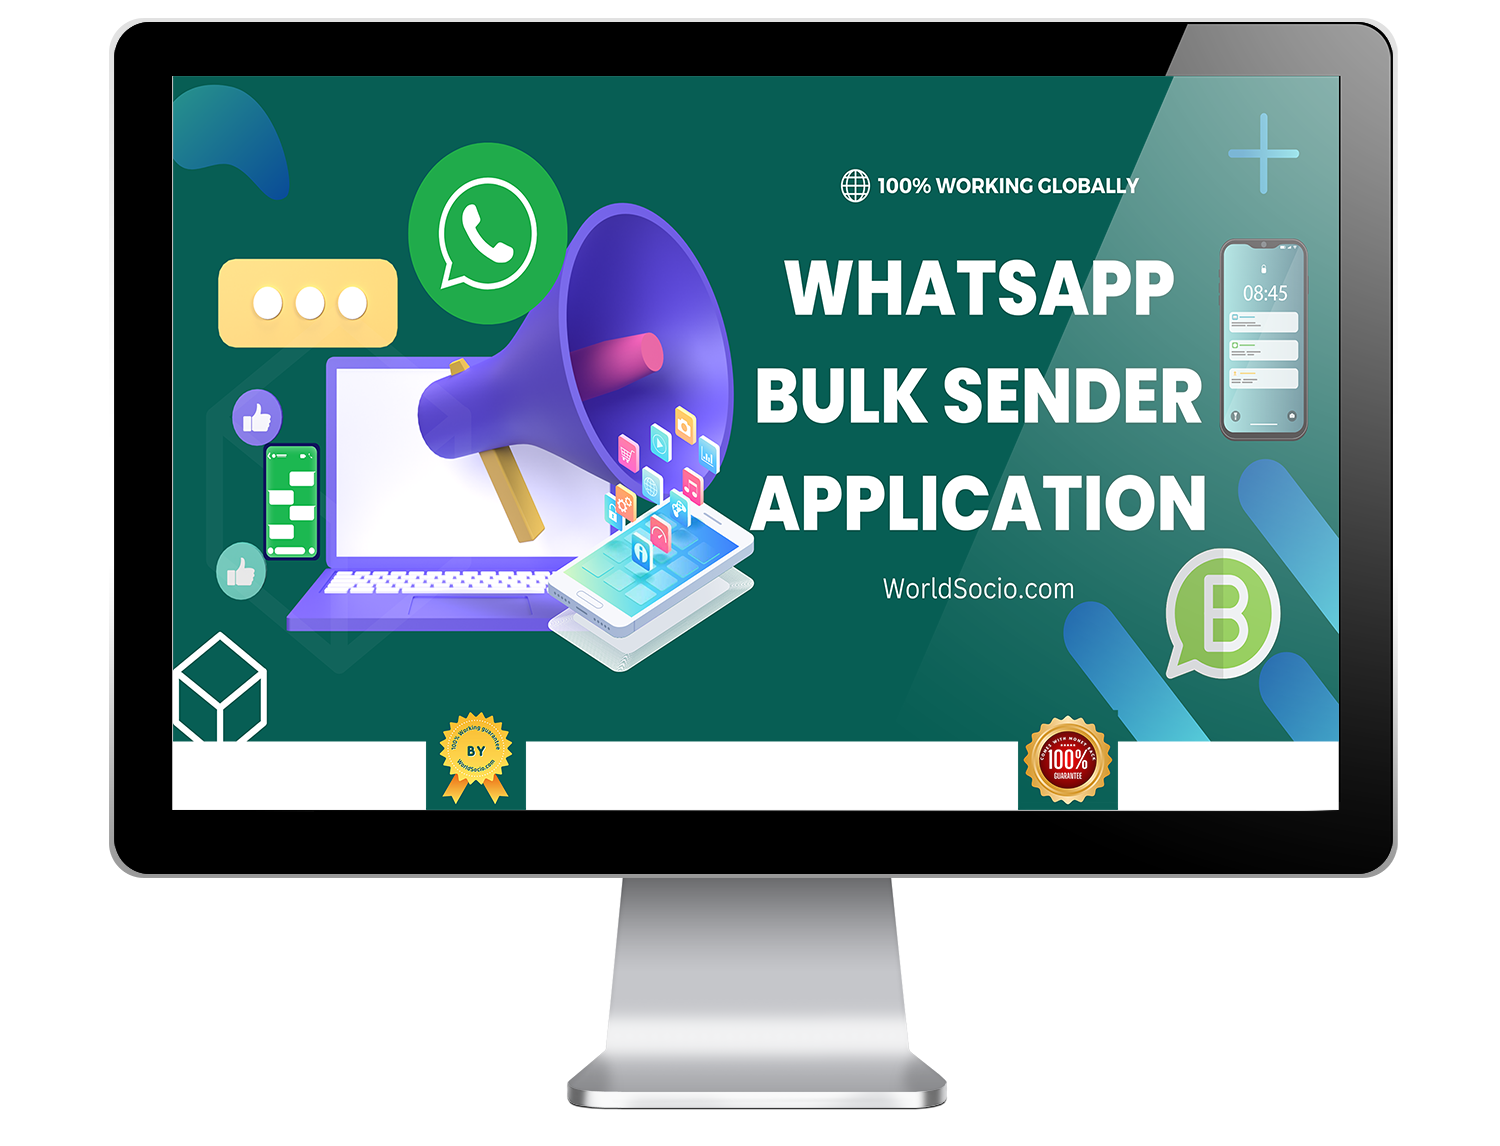 whatsapp-bulk-sender-application-4.png